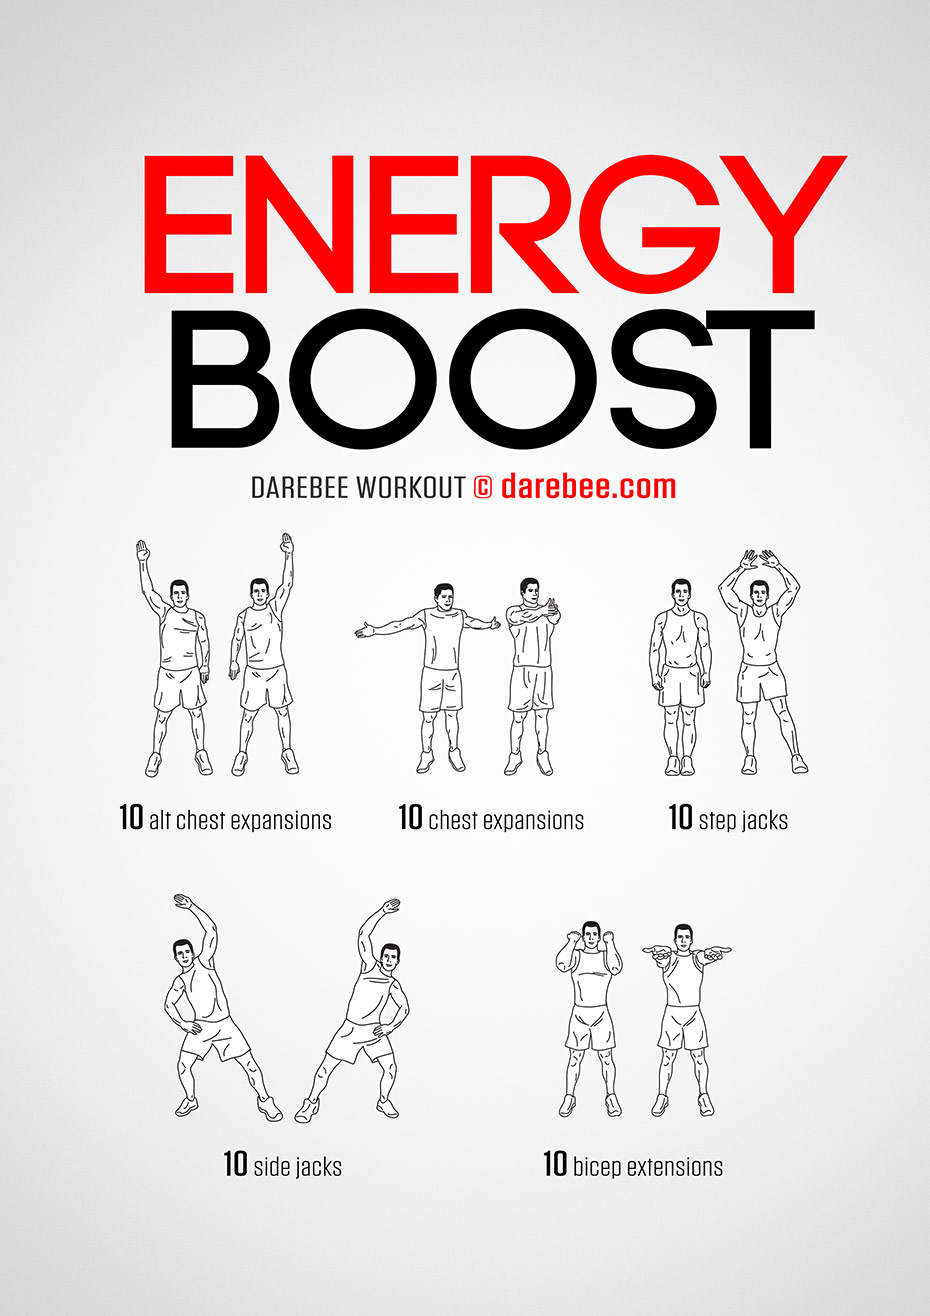 Energy-boosting exercises